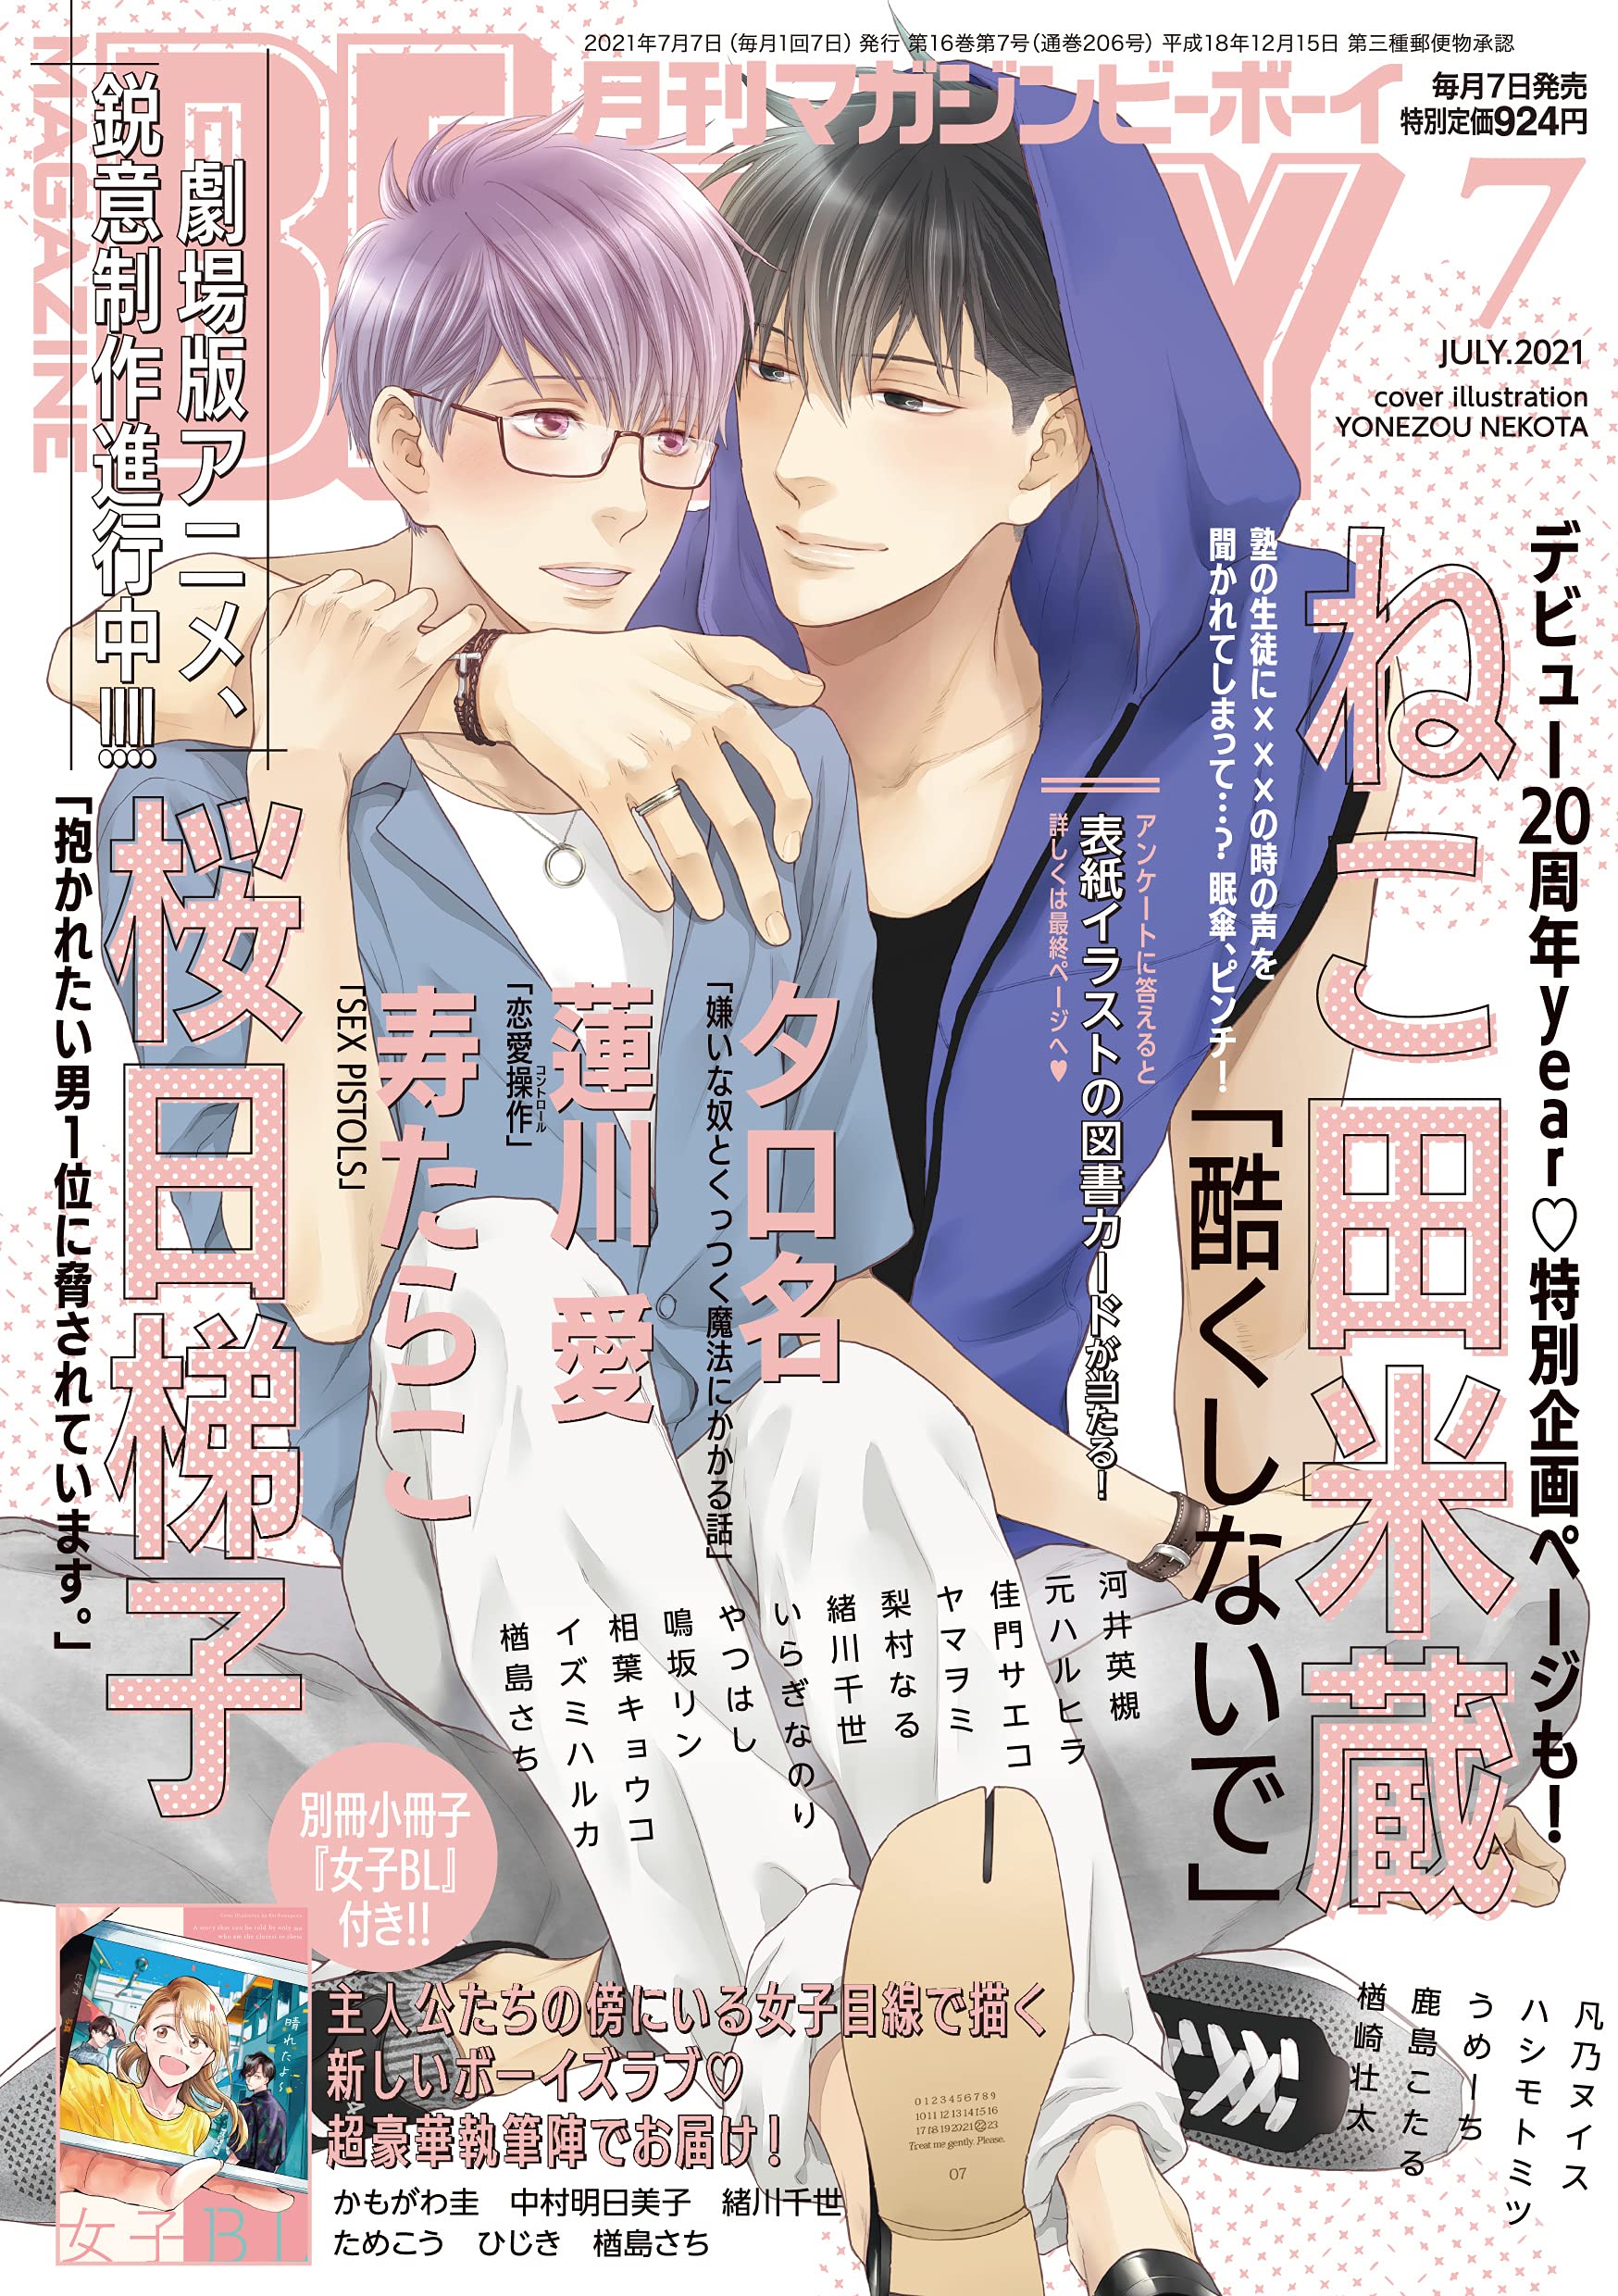 Boys Love (Yaoi) Magazine - MAGAZINE BE×BOY (MAGAZINE BE×BOY(マガジンビーボーイ) 2021年07月号[雑誌]) / Hasukawa Ai & Sakurabi Hashigo & Ogawa Chise & やつはし & Nekota Yonezou